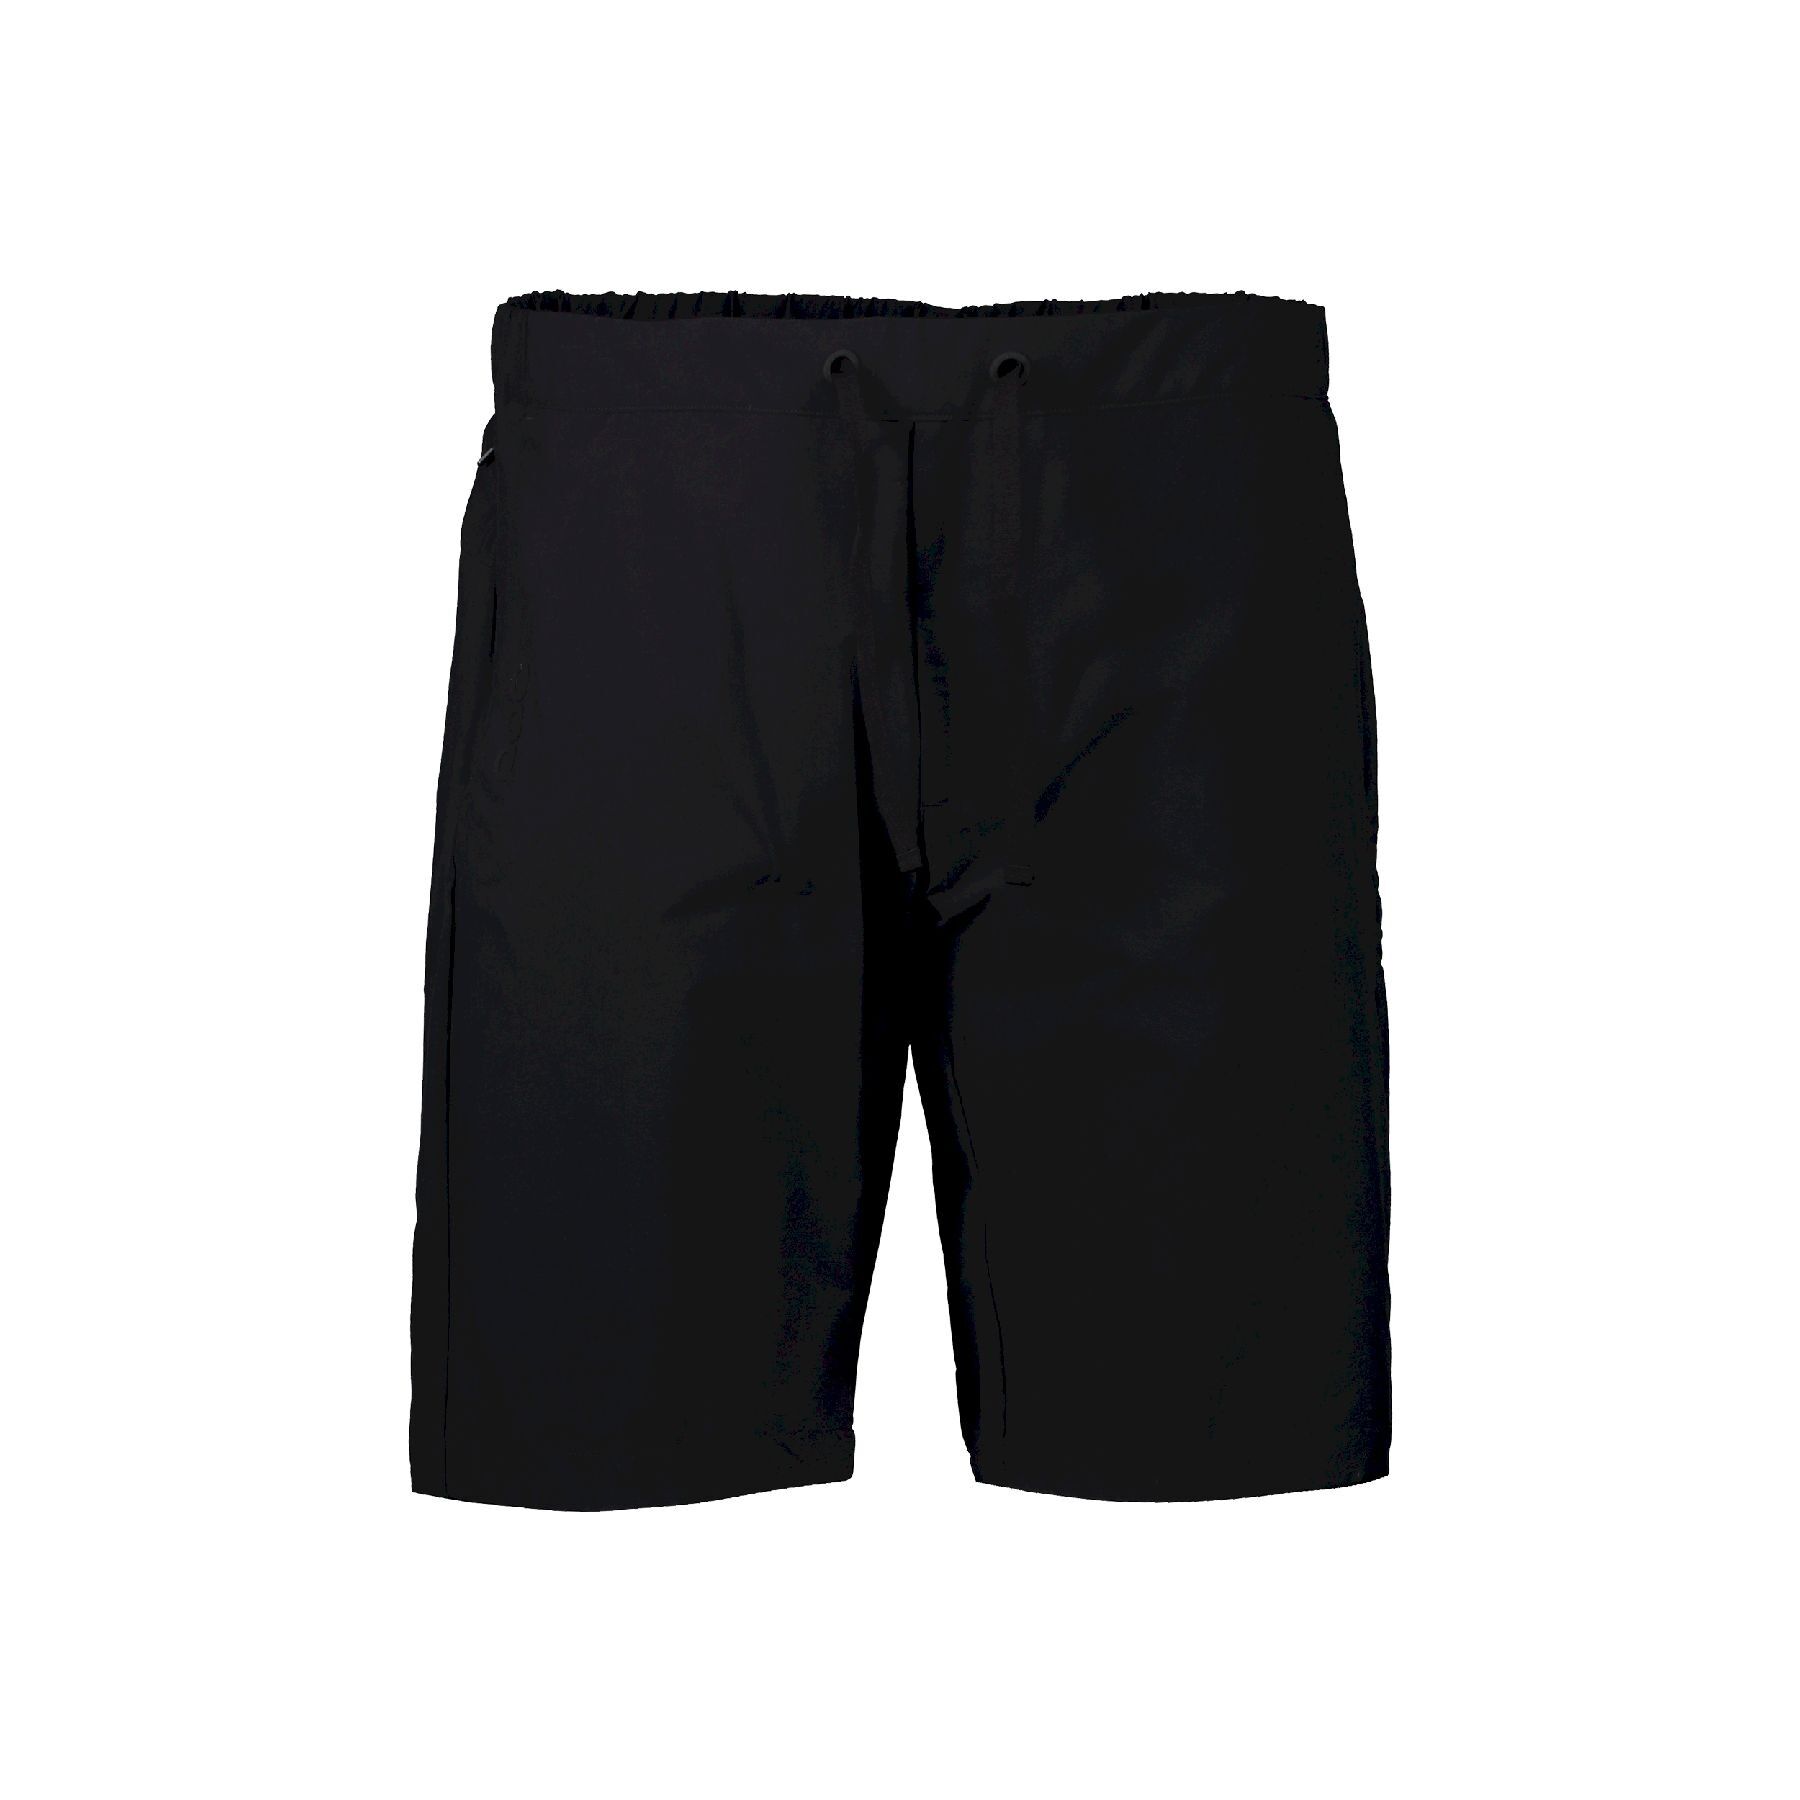 Poc Transcend Shorts - MTB shorts - Men's